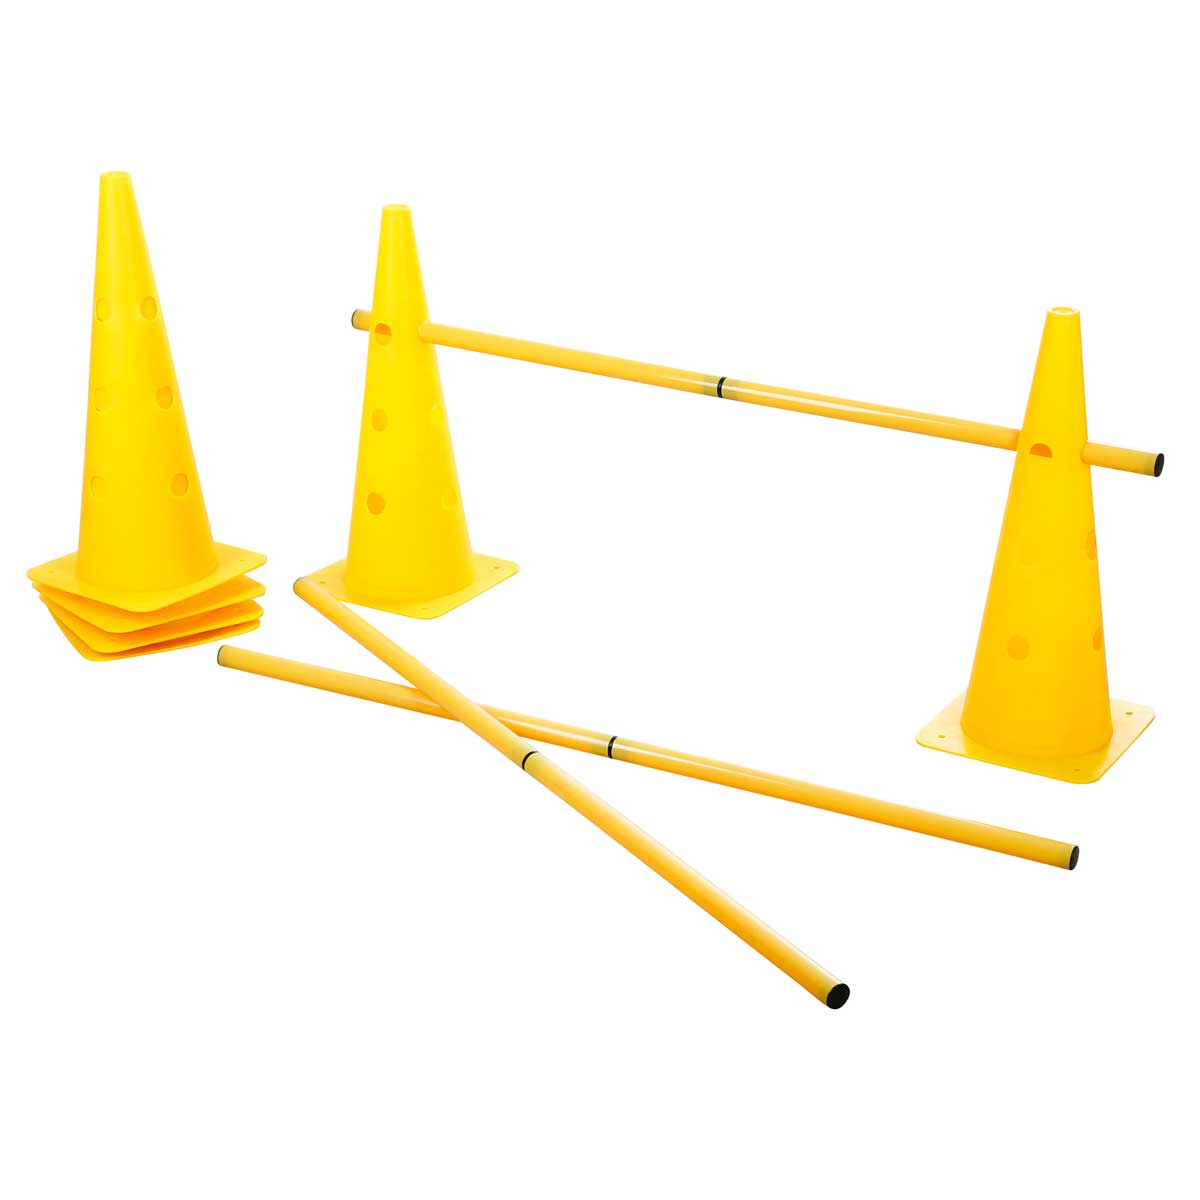 Agility Cone-Hurdle Set yellow, three hurdle